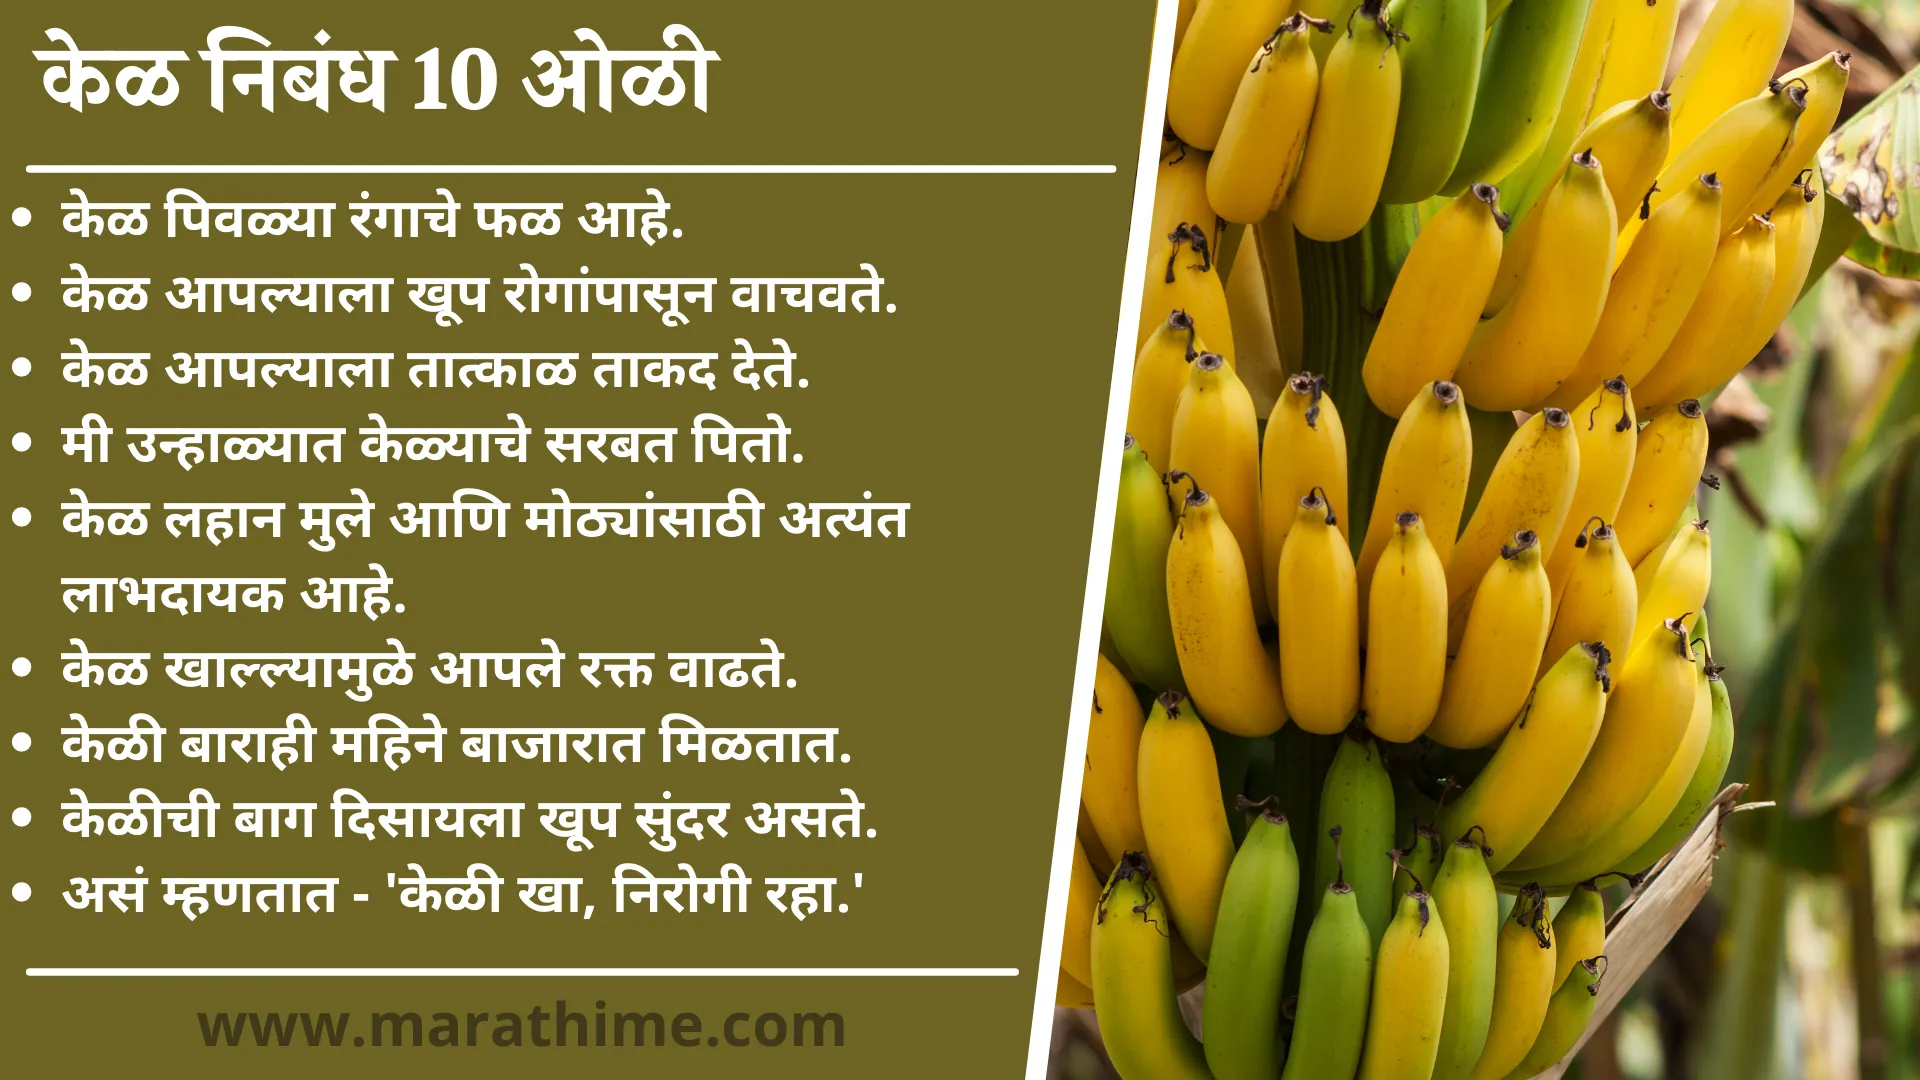 केळ  निबंध 10 ओळी-10 Lines on Banana in Marathi-Few Lines on Banana in Marathi